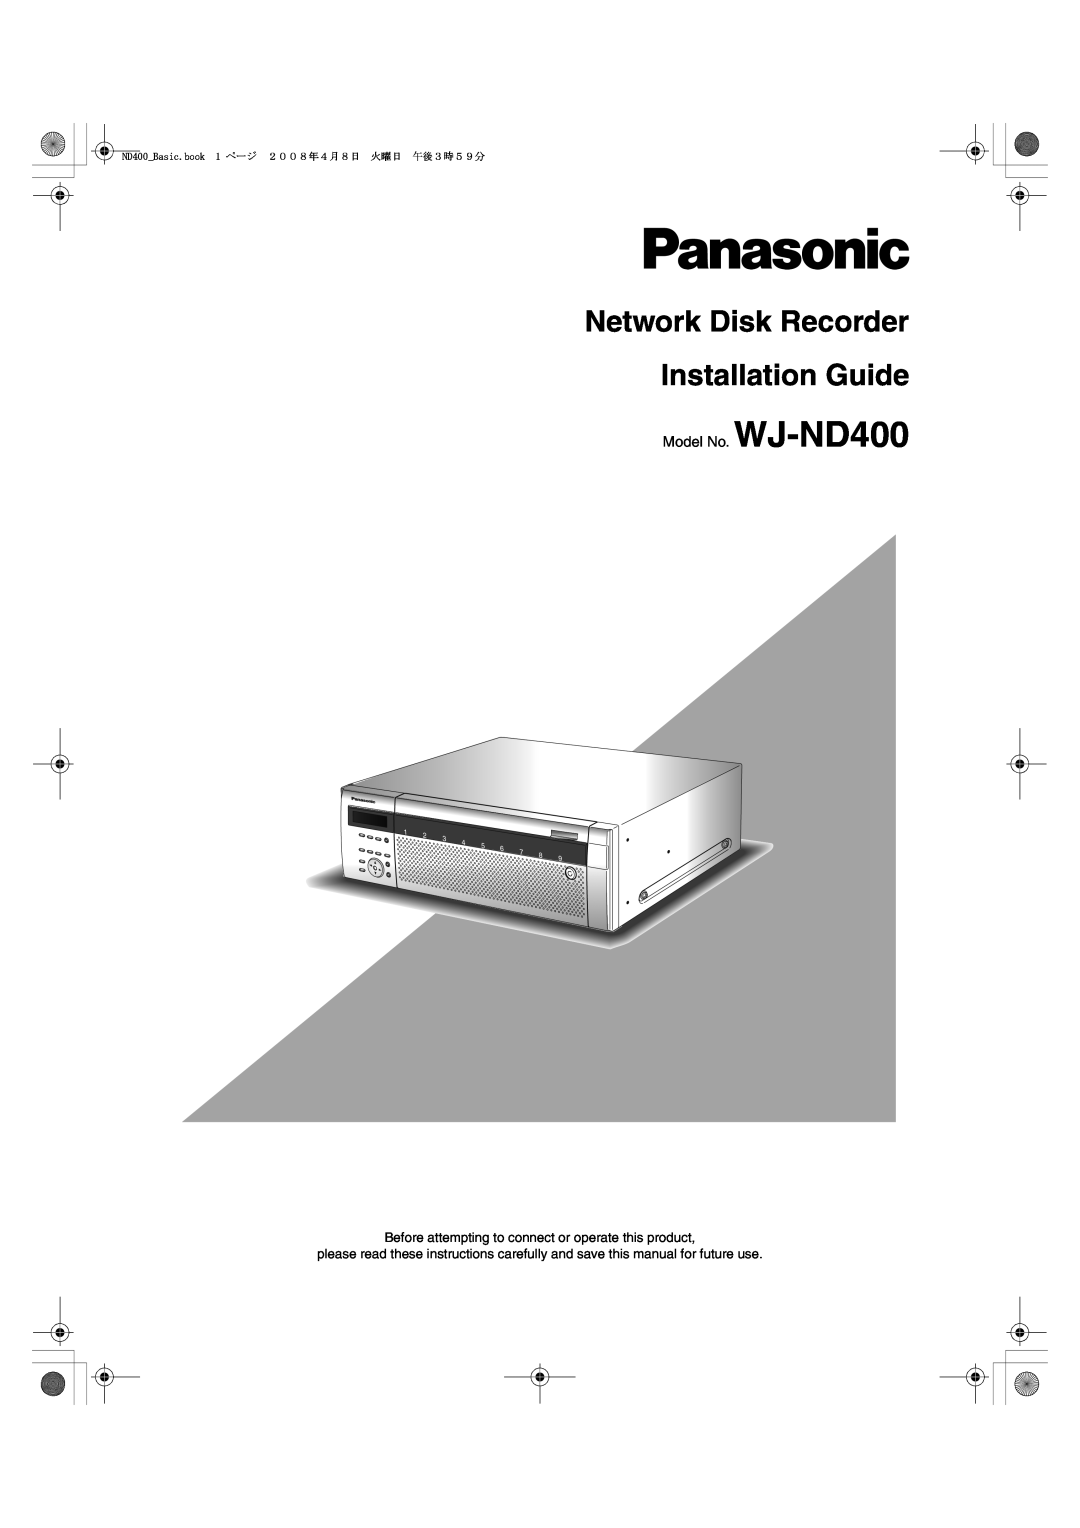 Panasonic manual Network Disk Recorder Installation Guide, Model No. WJ-ND400 